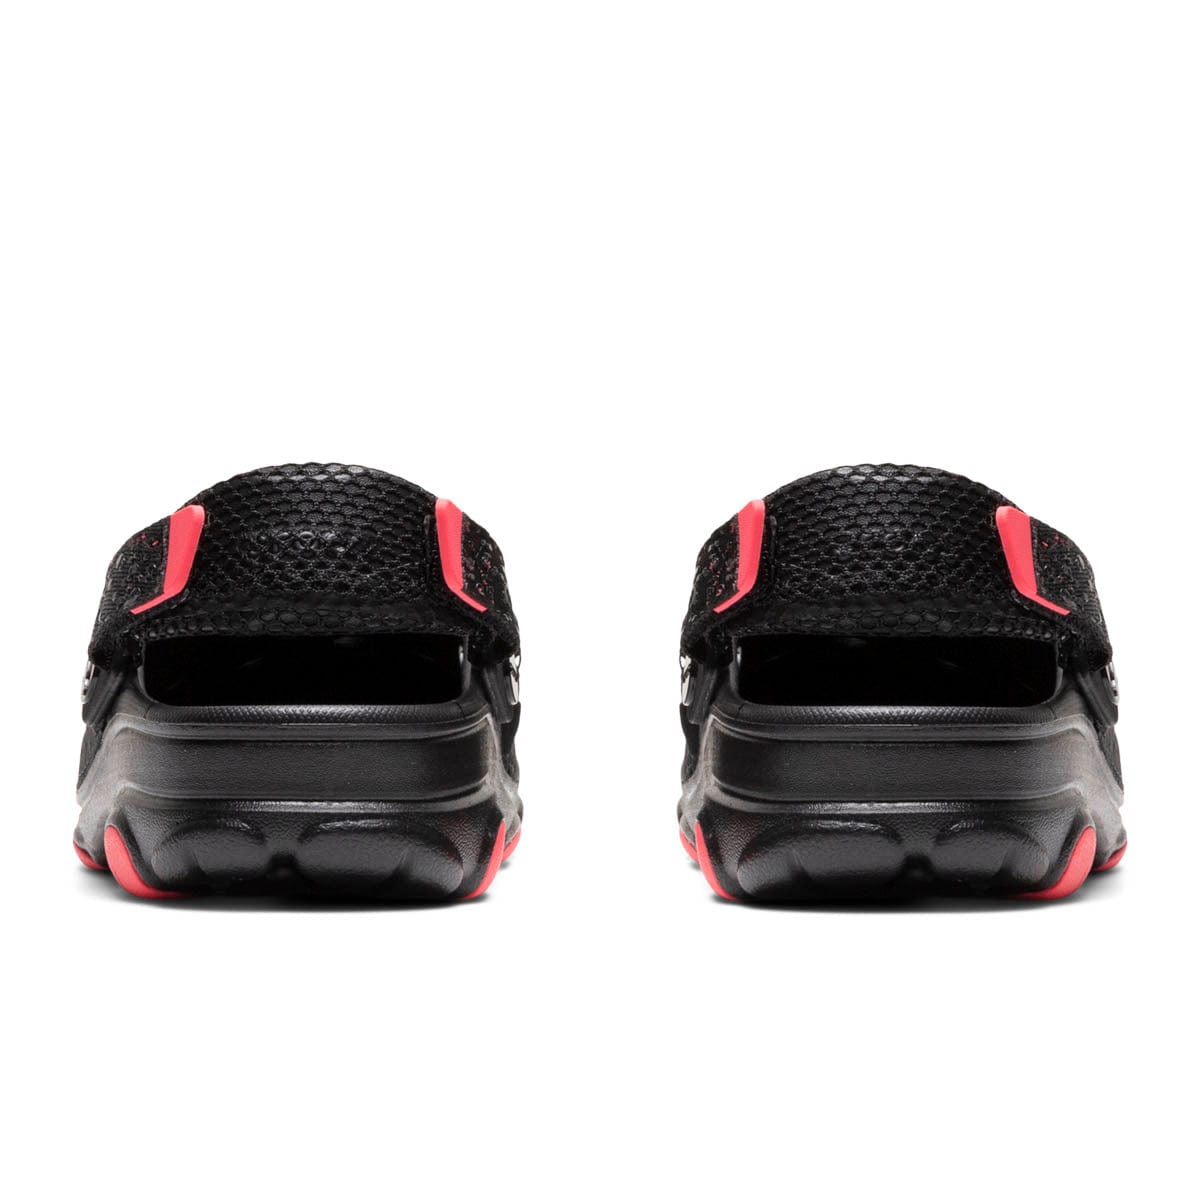 X STAPLE DESIGN CROCS AT BLACK/ORANGE | Crocs Chaussures сапожки allcast ii boot | GmarShops – GmarShops Store